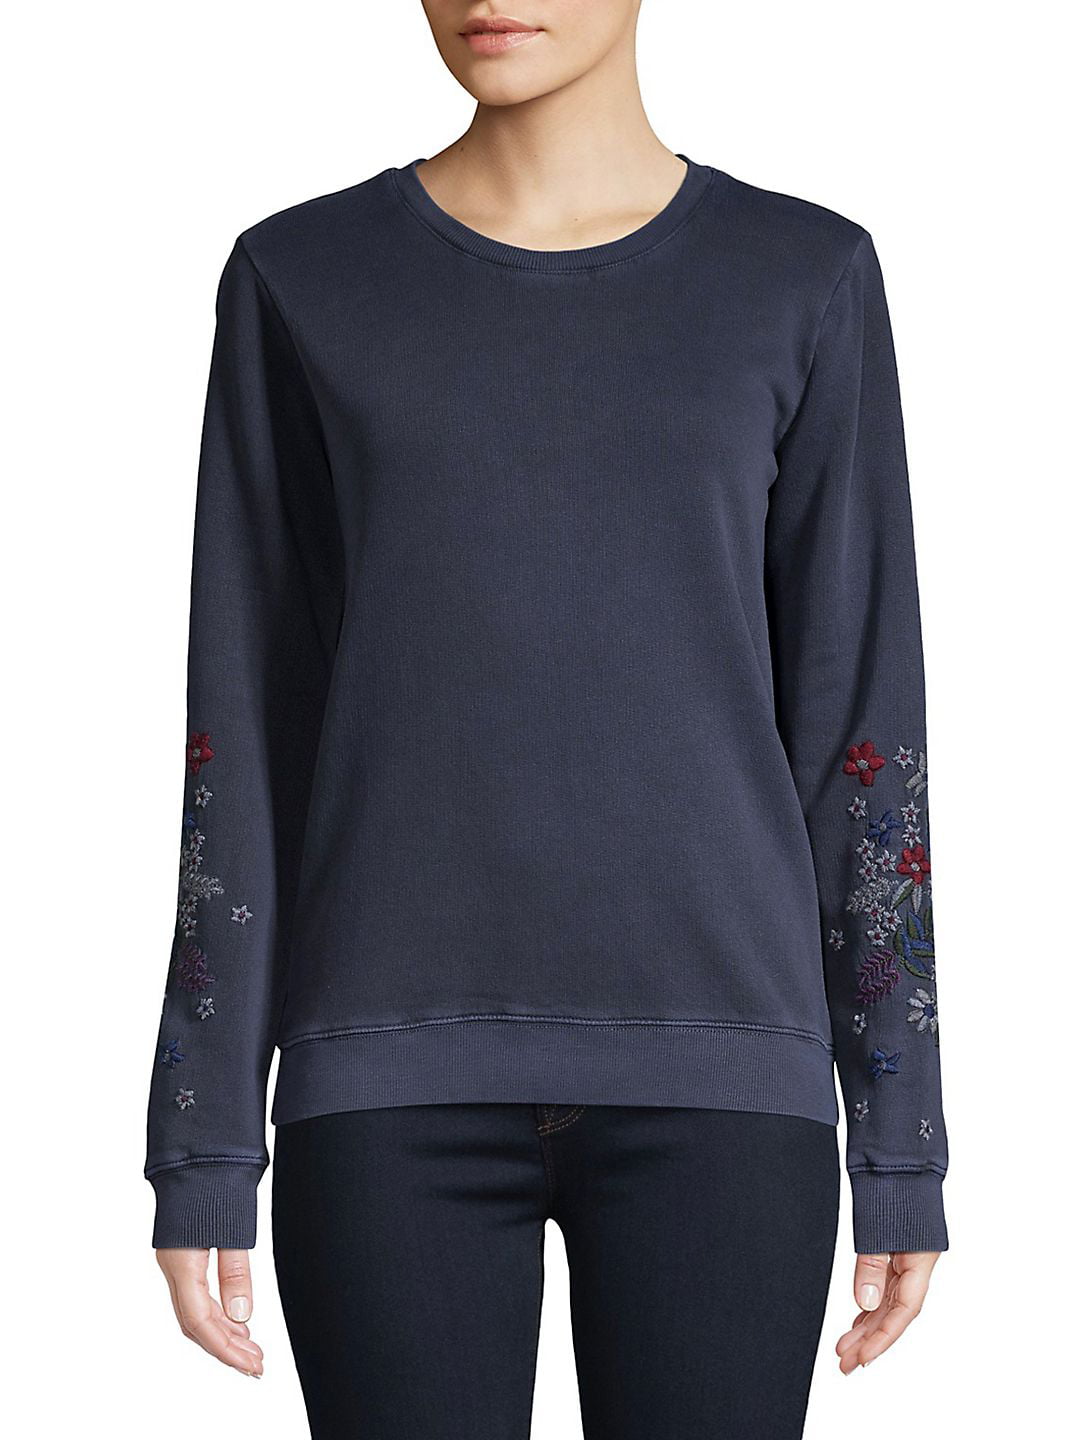 Lucky Brand - Lucky Brand Womens Embroidered Flower Sweatshirt navy S